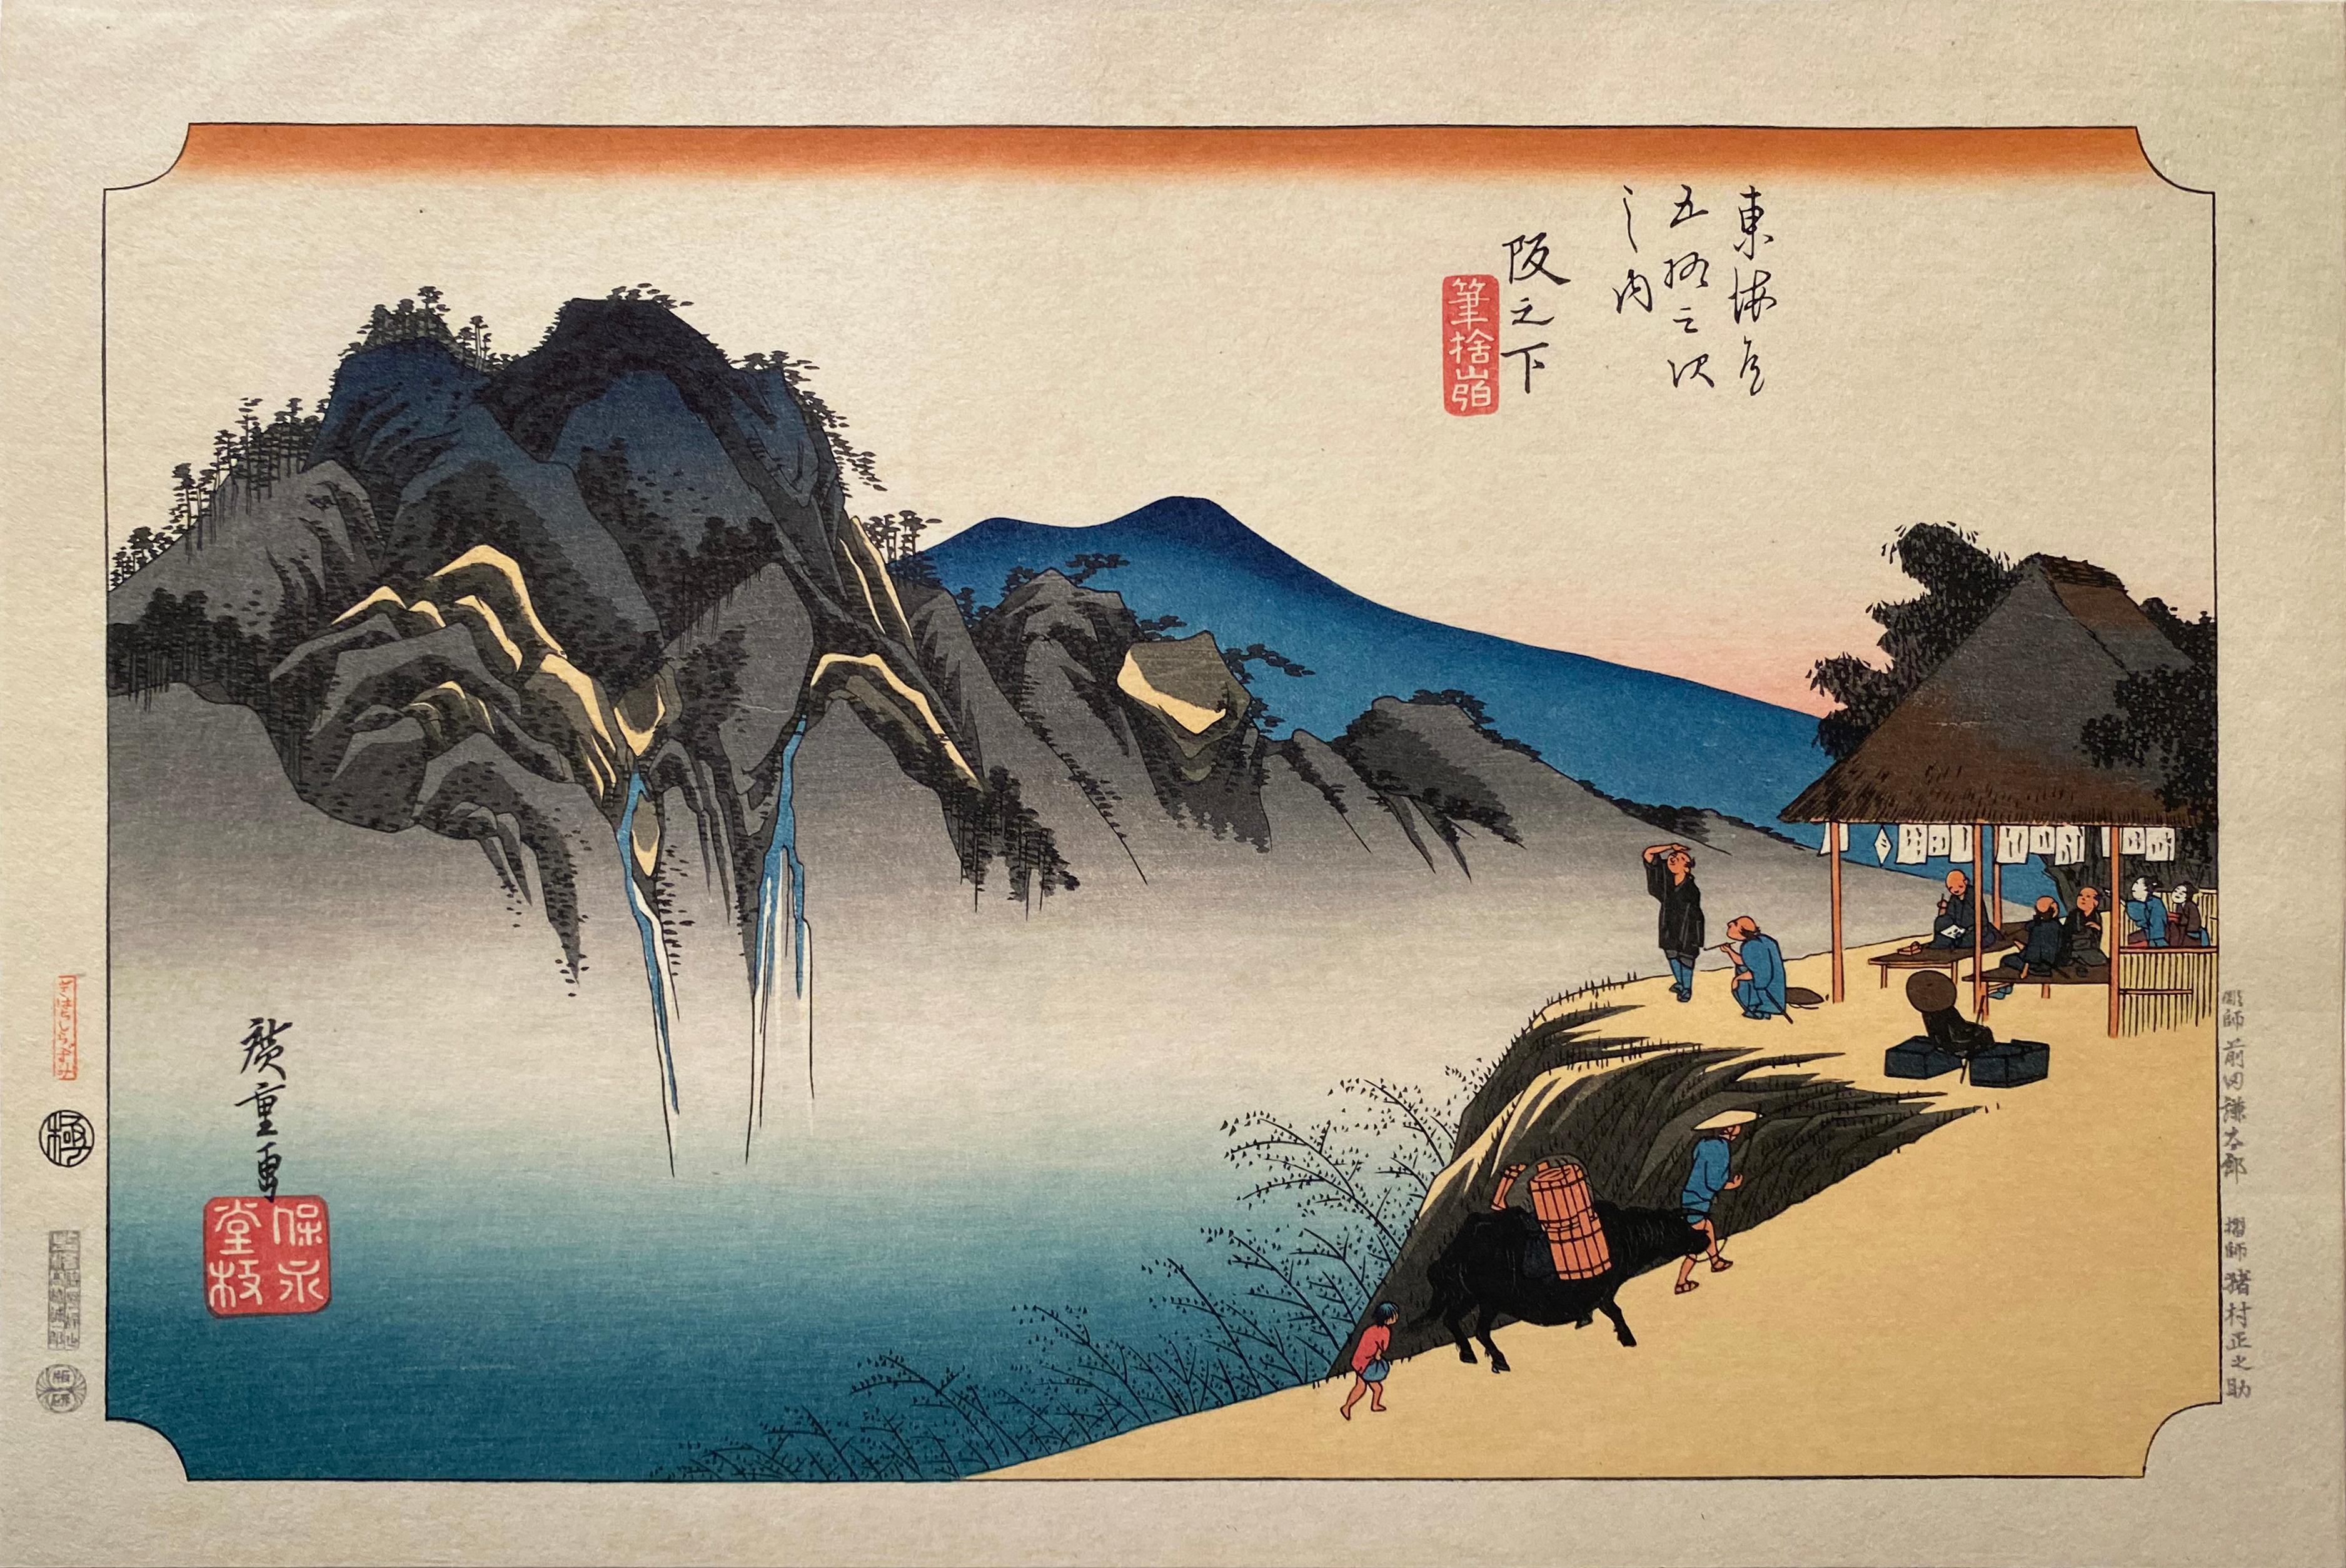 Utagawa Hiroshige (Ando Hiroshige) Landscape Print - 'Fudesute Mountain', After Utagawa Hiroshige 歌川廣重, Ukiyo-e Woodblock, Tokaido